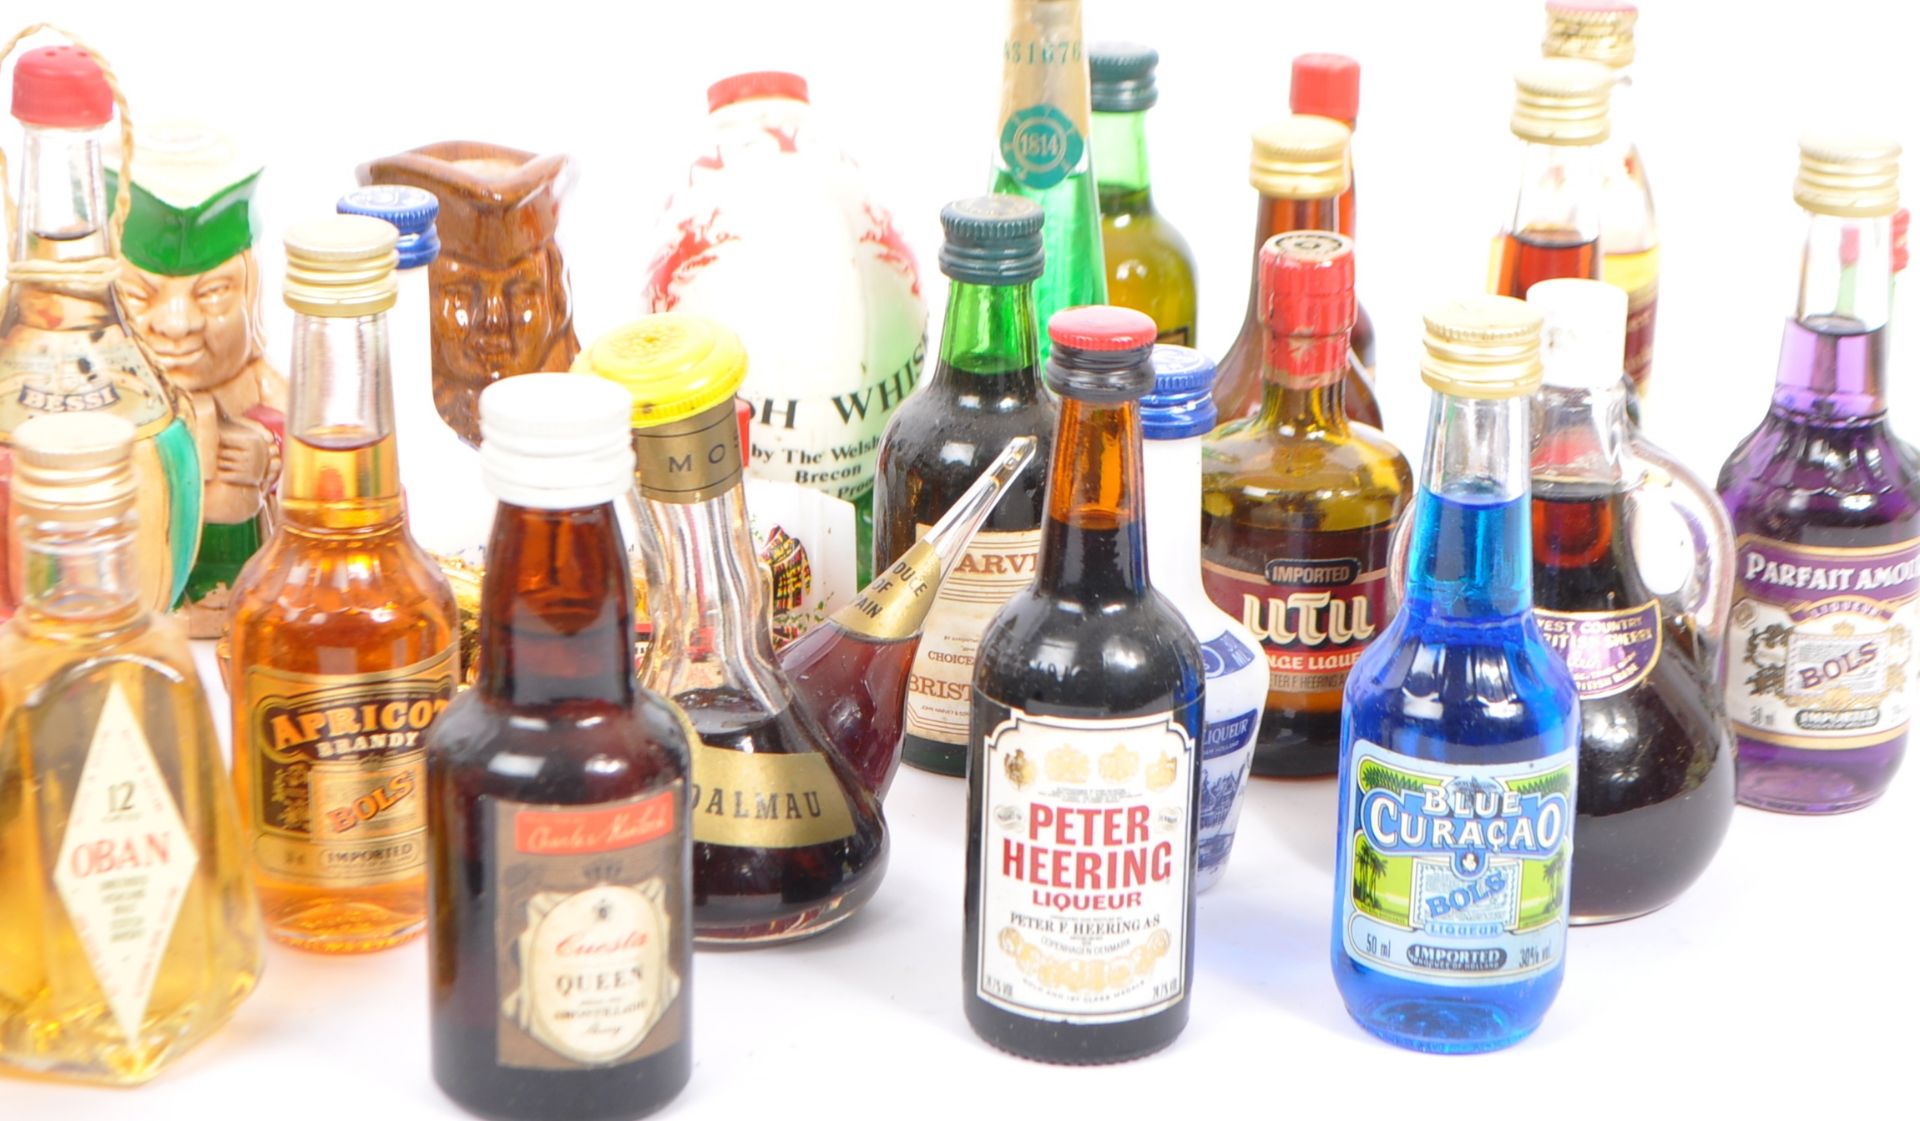 COLLECTION OF MINIATURE SOUVENIR ALCOHOL BOTTLES - Image 4 of 4